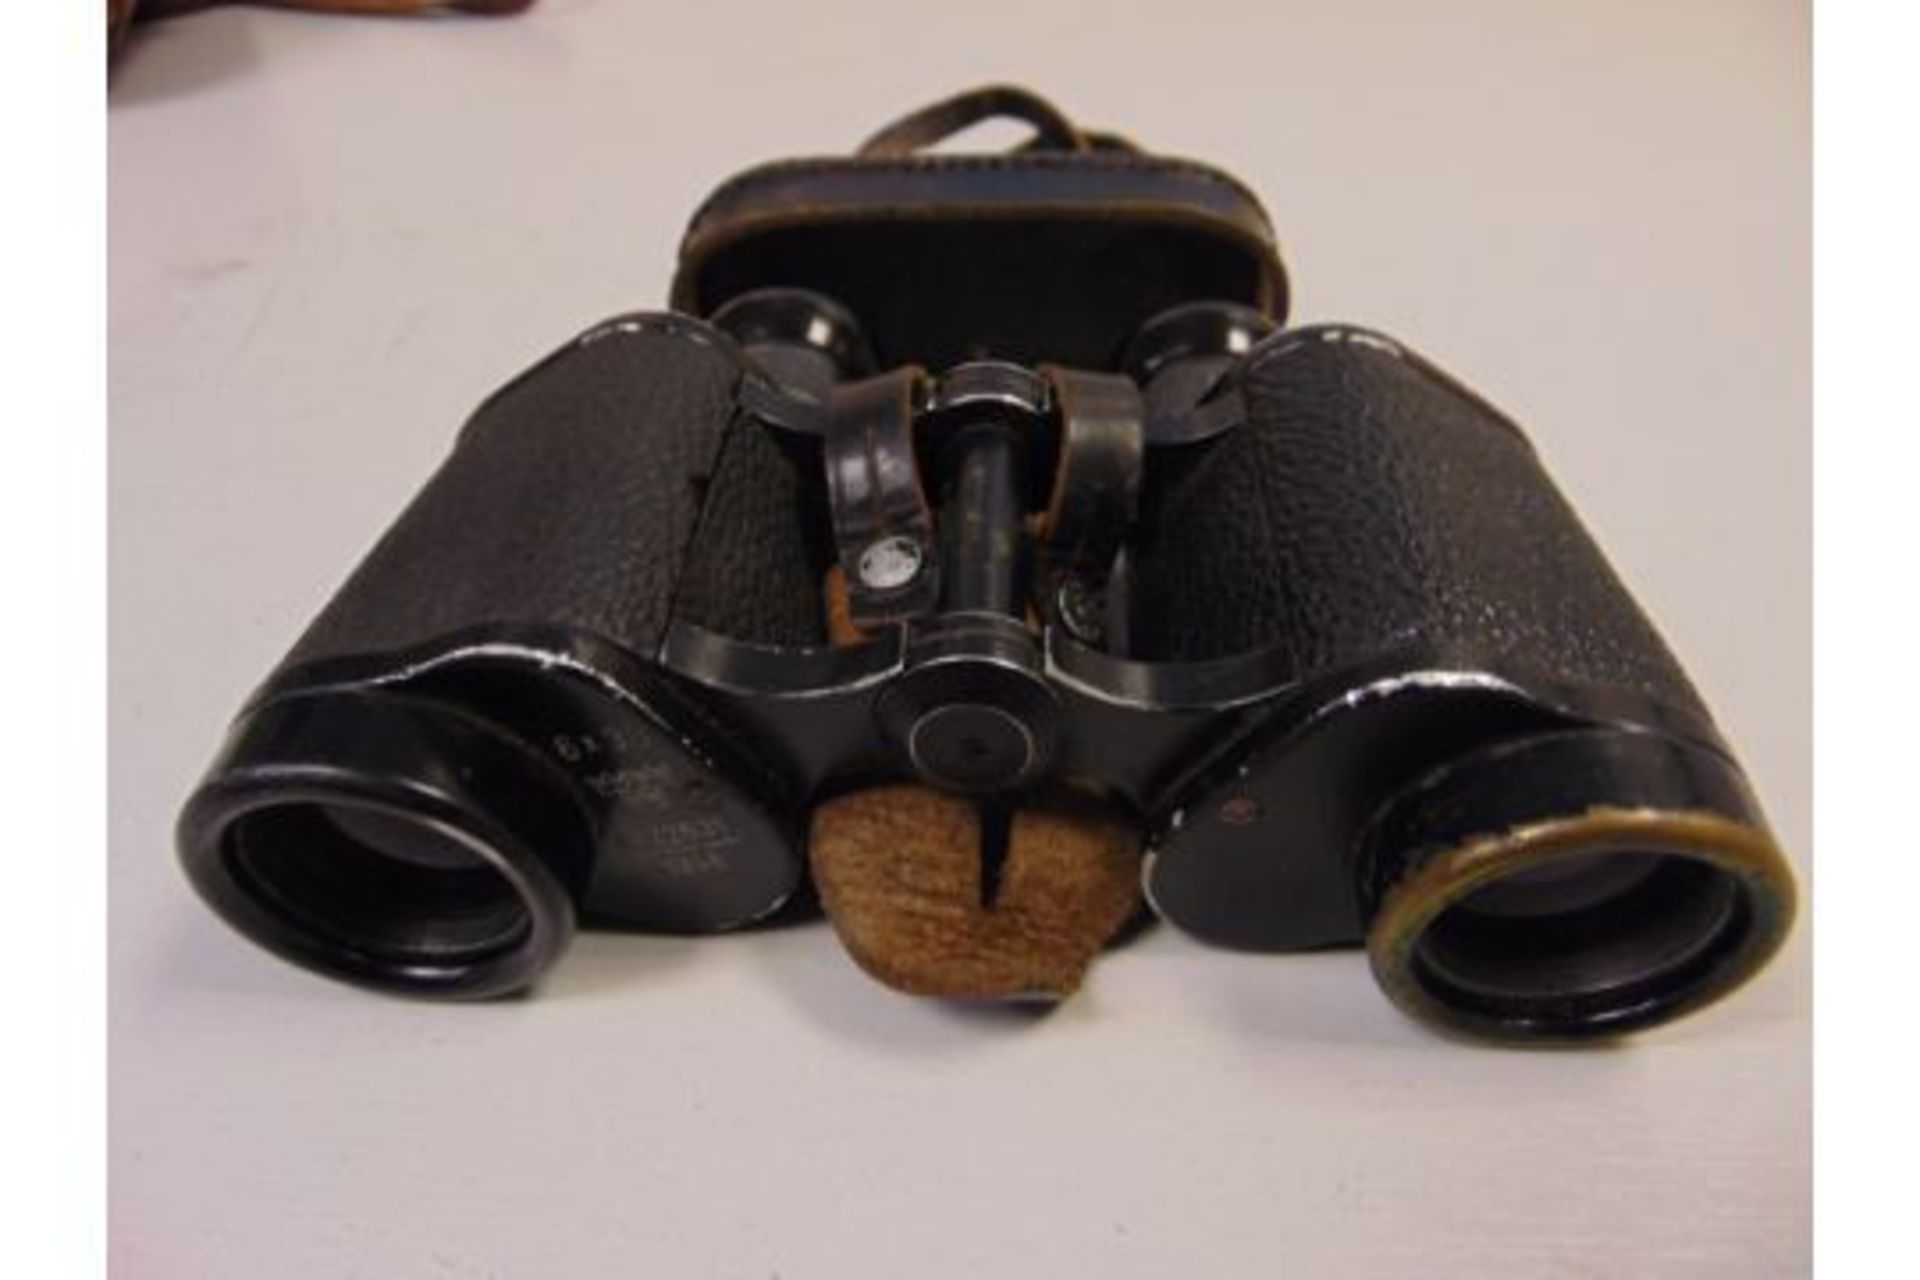 NIFE 6 x 30 Binoculars in Original Leather Case dated 1948 - Image 5 of 9